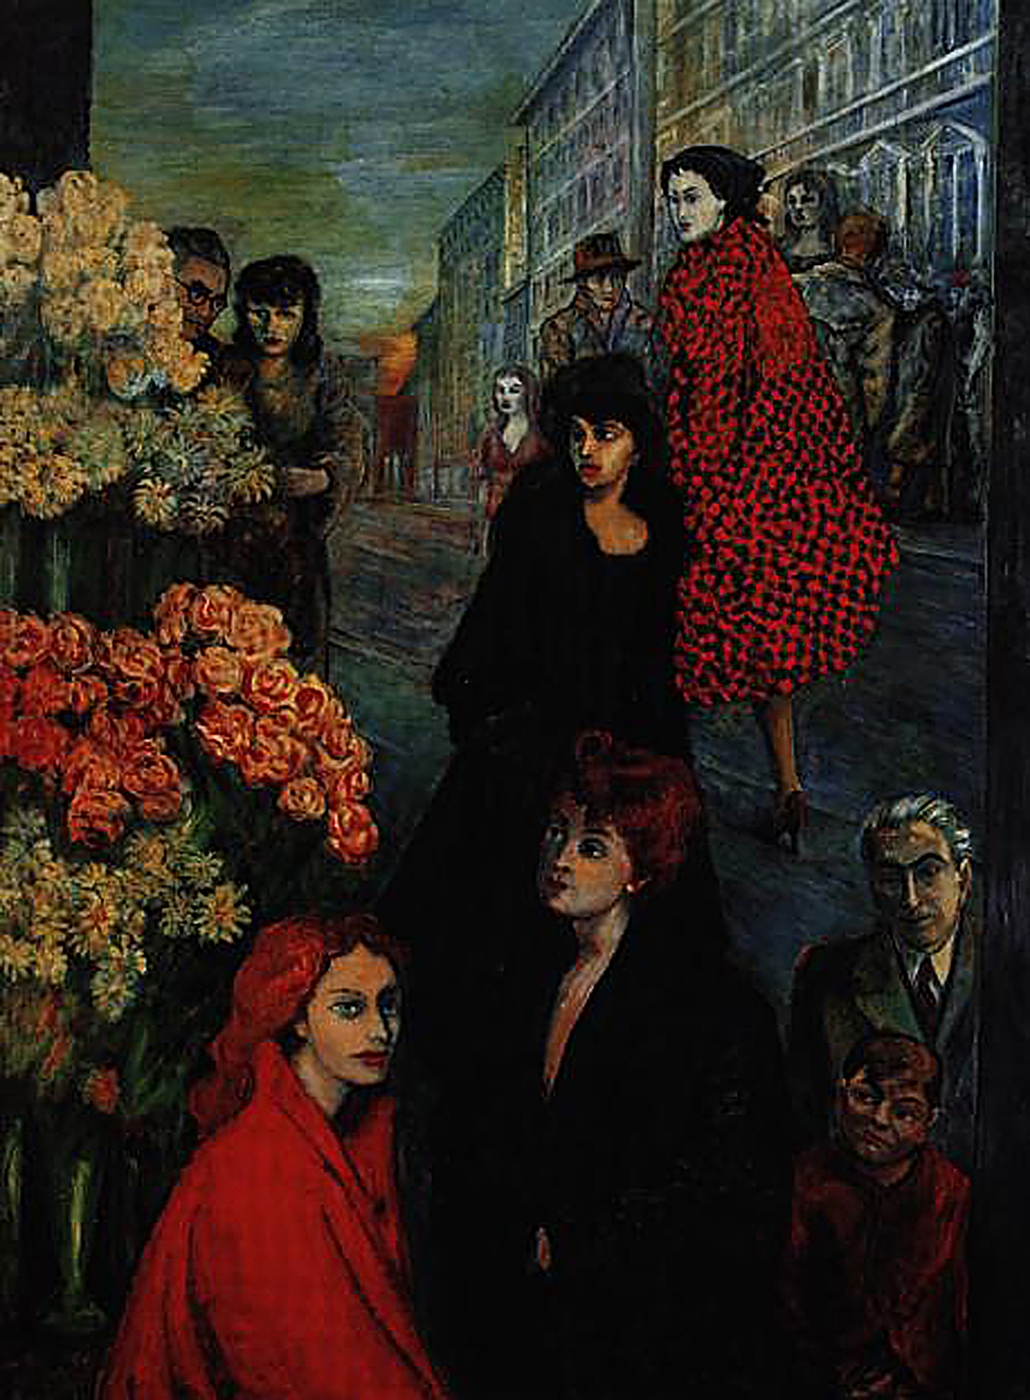 Archivio Aligi Sassu, Via Manzoni 1952
olio su tela
200 × 149,5 cm, © Archivio Aligi Sassu